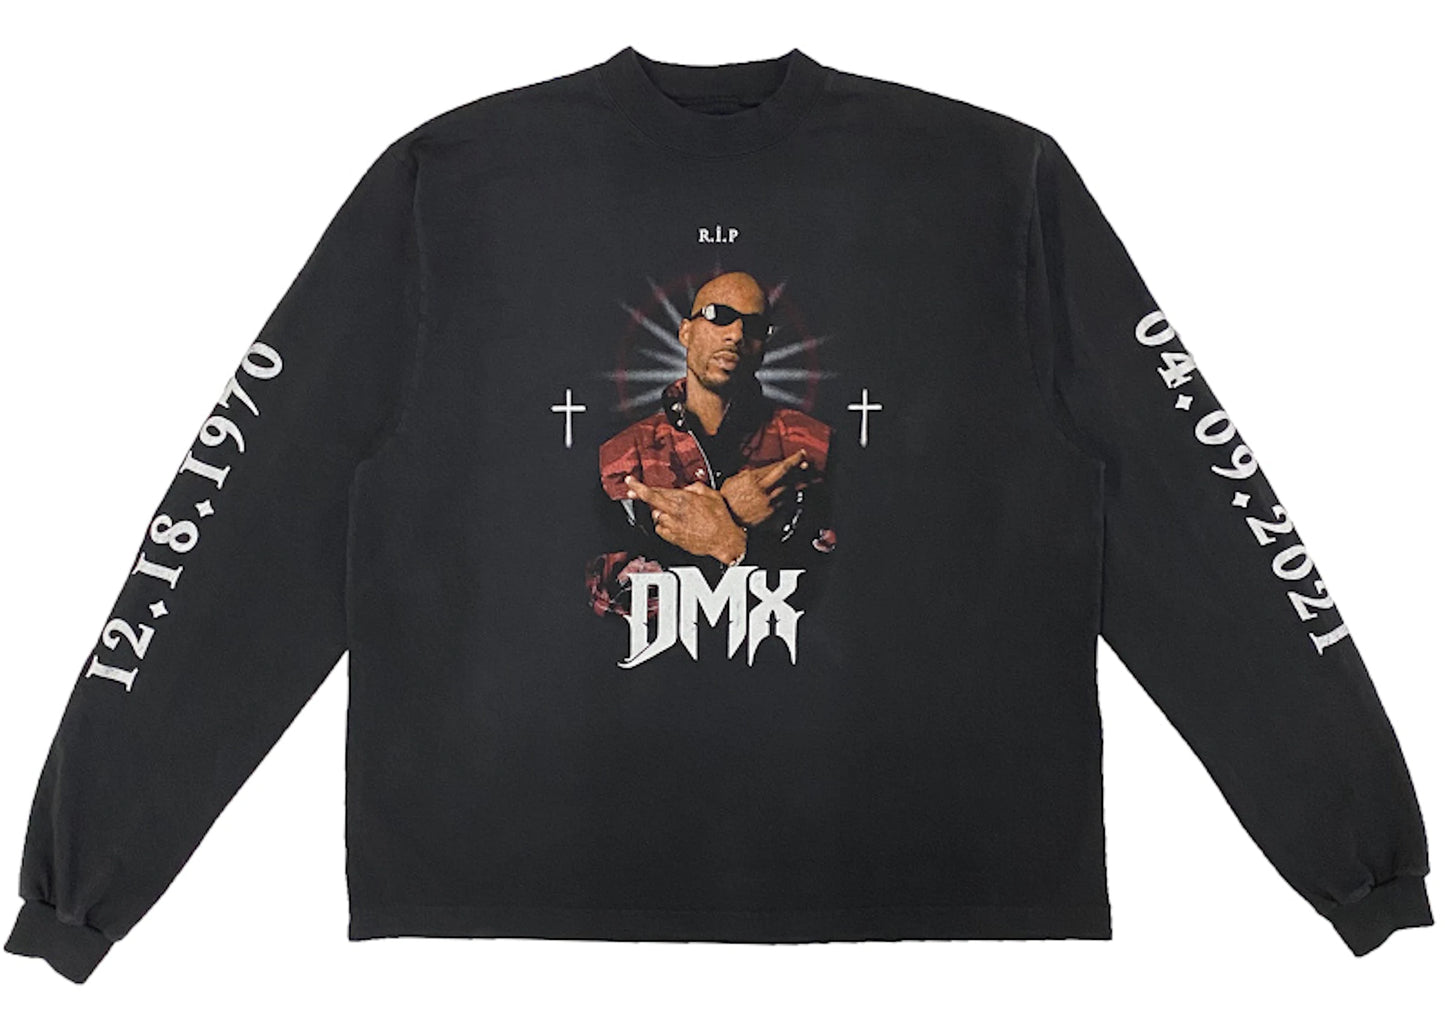 Balenciaga x Yeezy DMX, A Tribute Longsleeve T-Shirt Faded Black